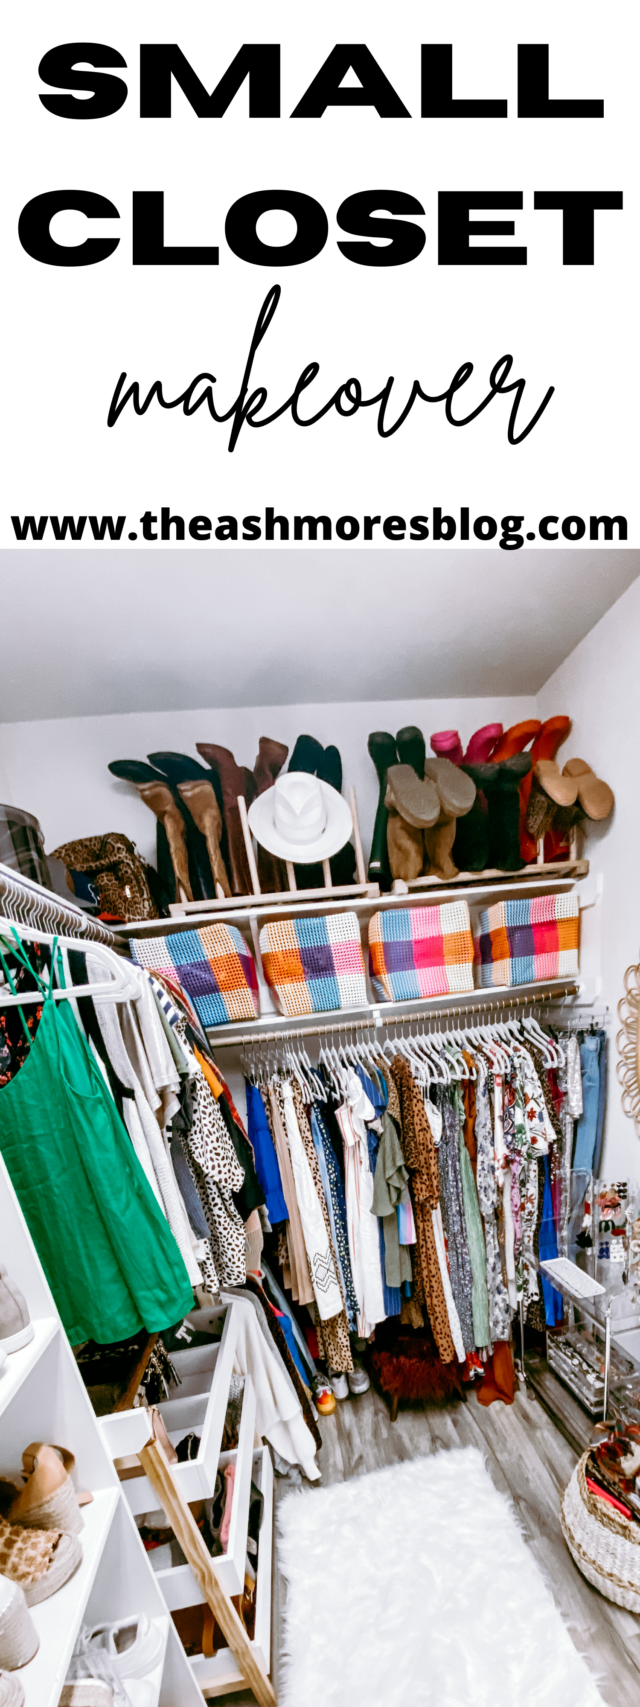 Small closet makeover. Maximizing every inch. - The Ashmores Blog